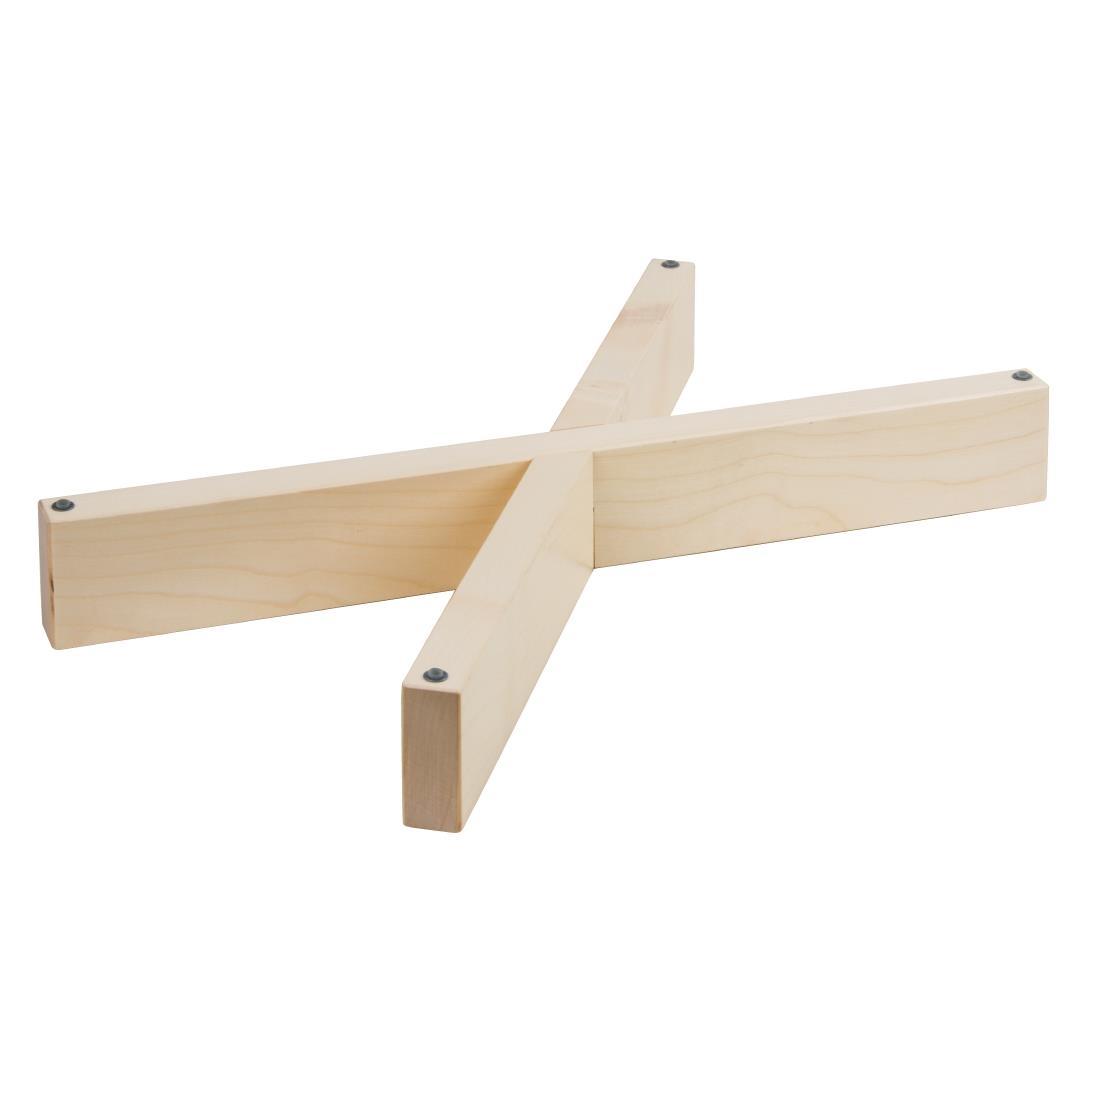 APS Frames Maple Wood Riser - Each - CB667 - 1